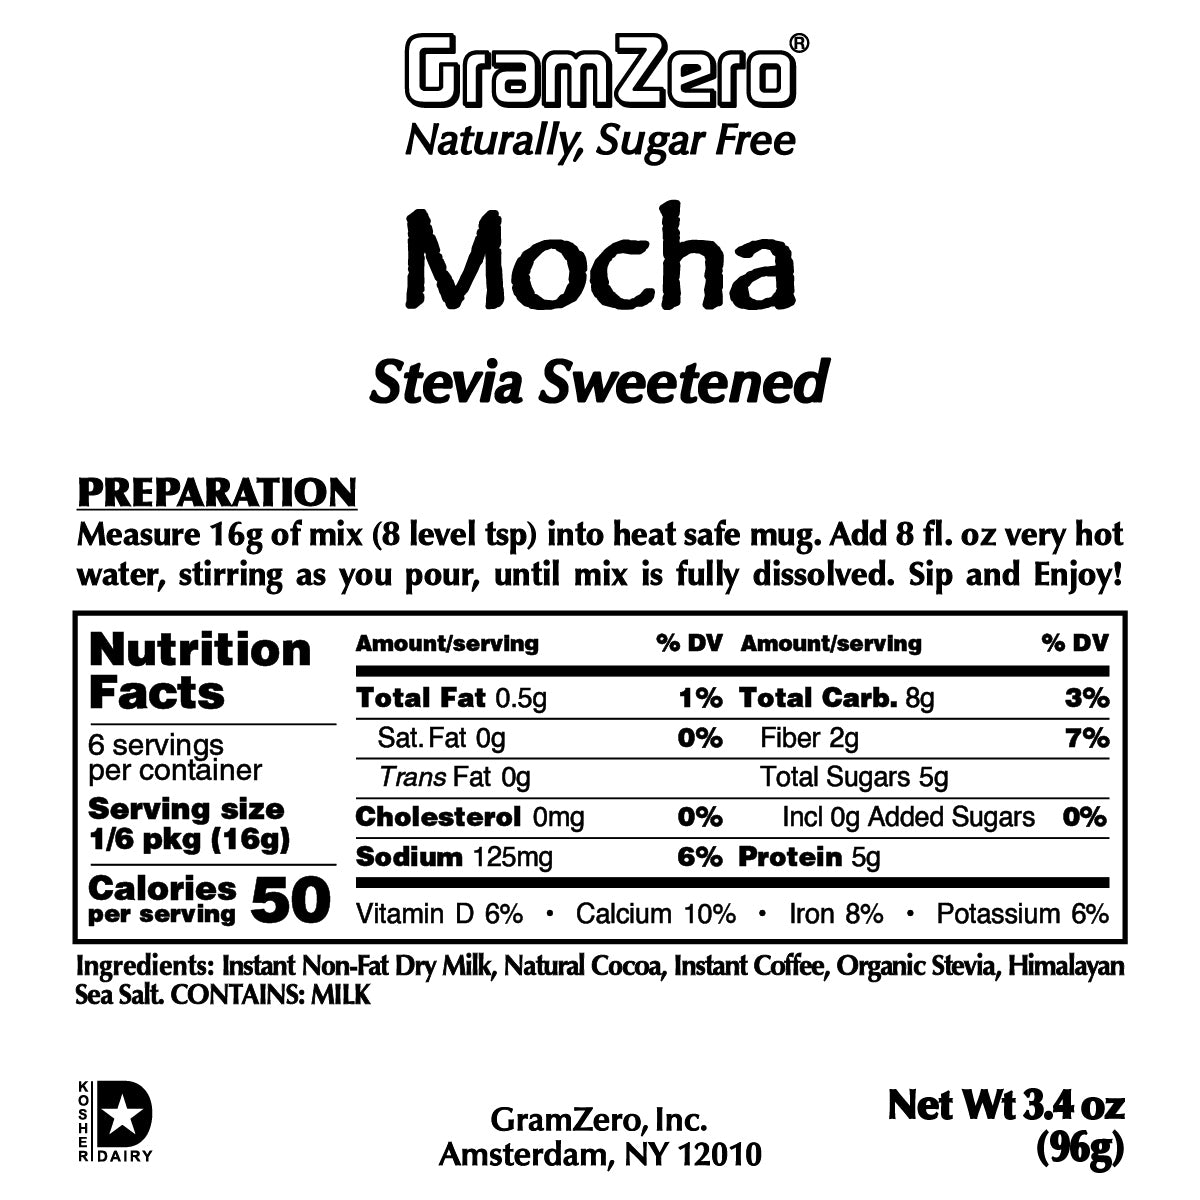 MOCHA ☕ No Sugar Added | Instant Stevia Hot Beverage Mix